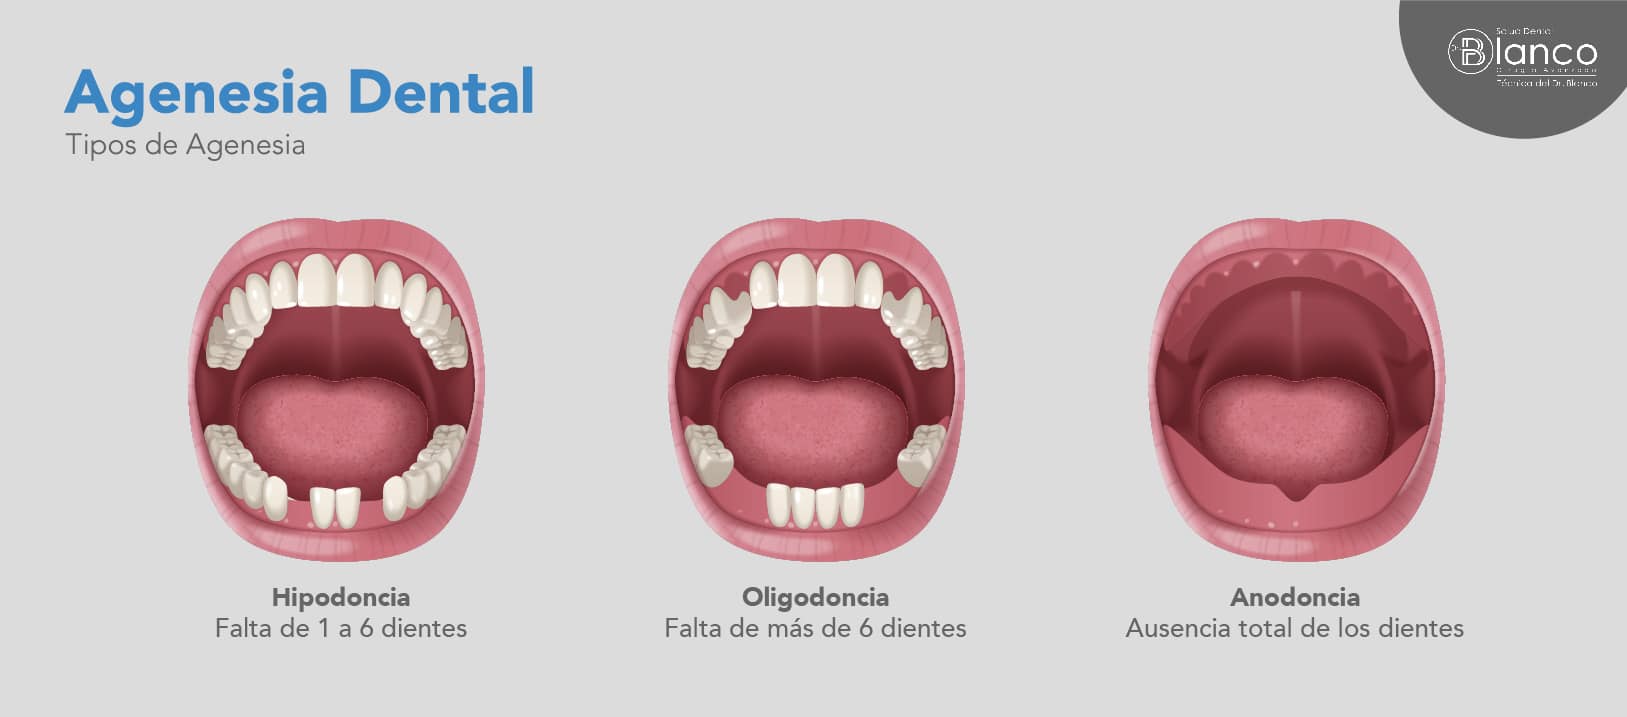 Agenesia Dental Tratamientos